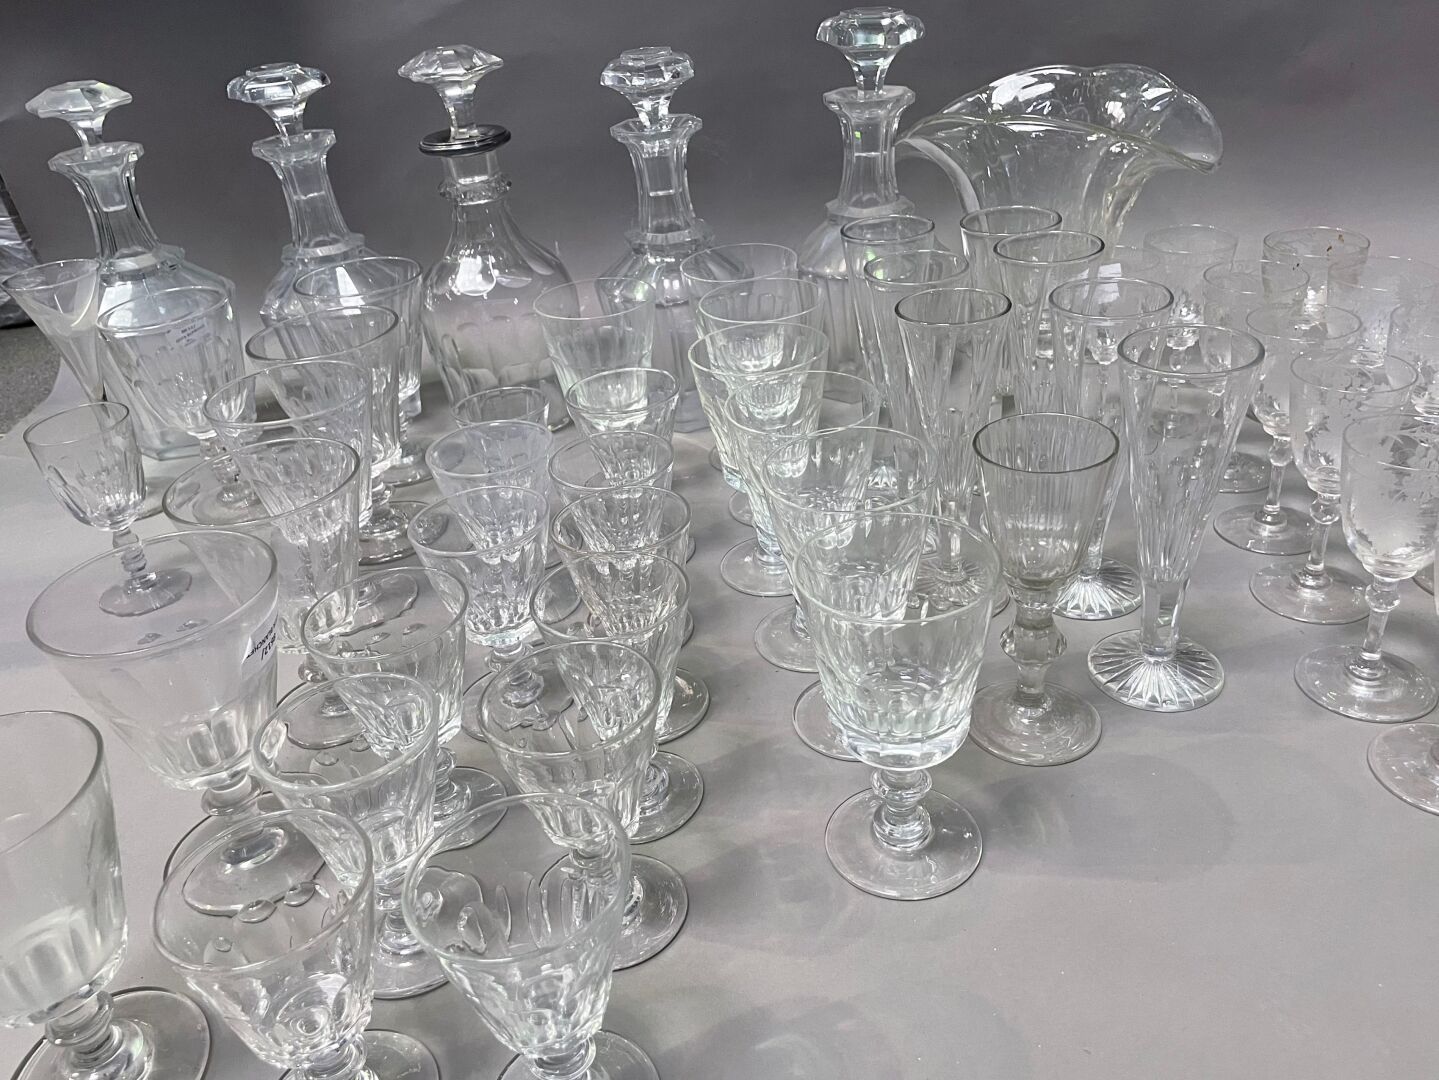 Null Une caisse de cristal et verrerie : verres, carafes, vases